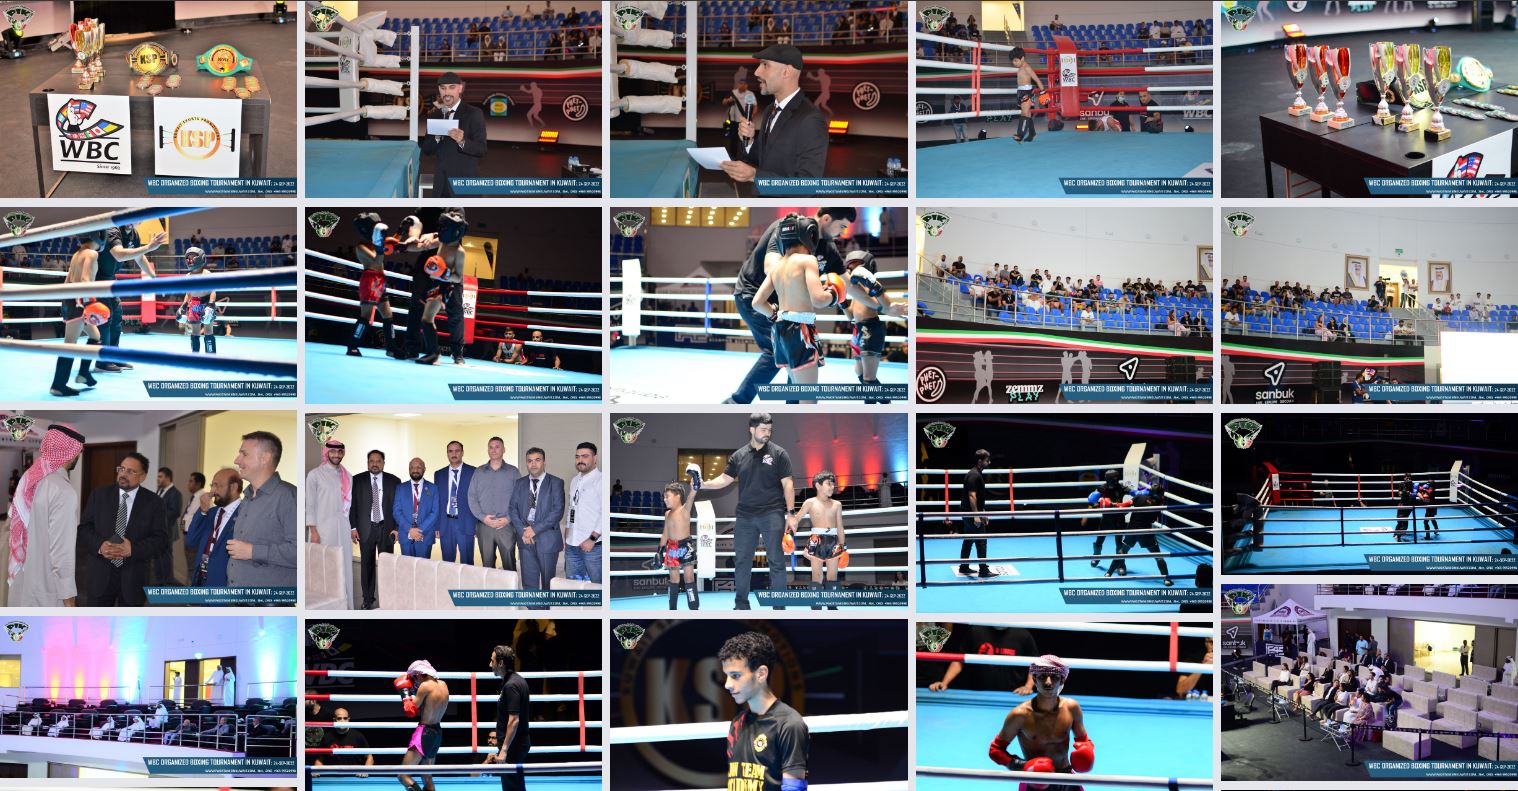 http://pakistanisinkuwait.com/images/wbs-boxing.jpg